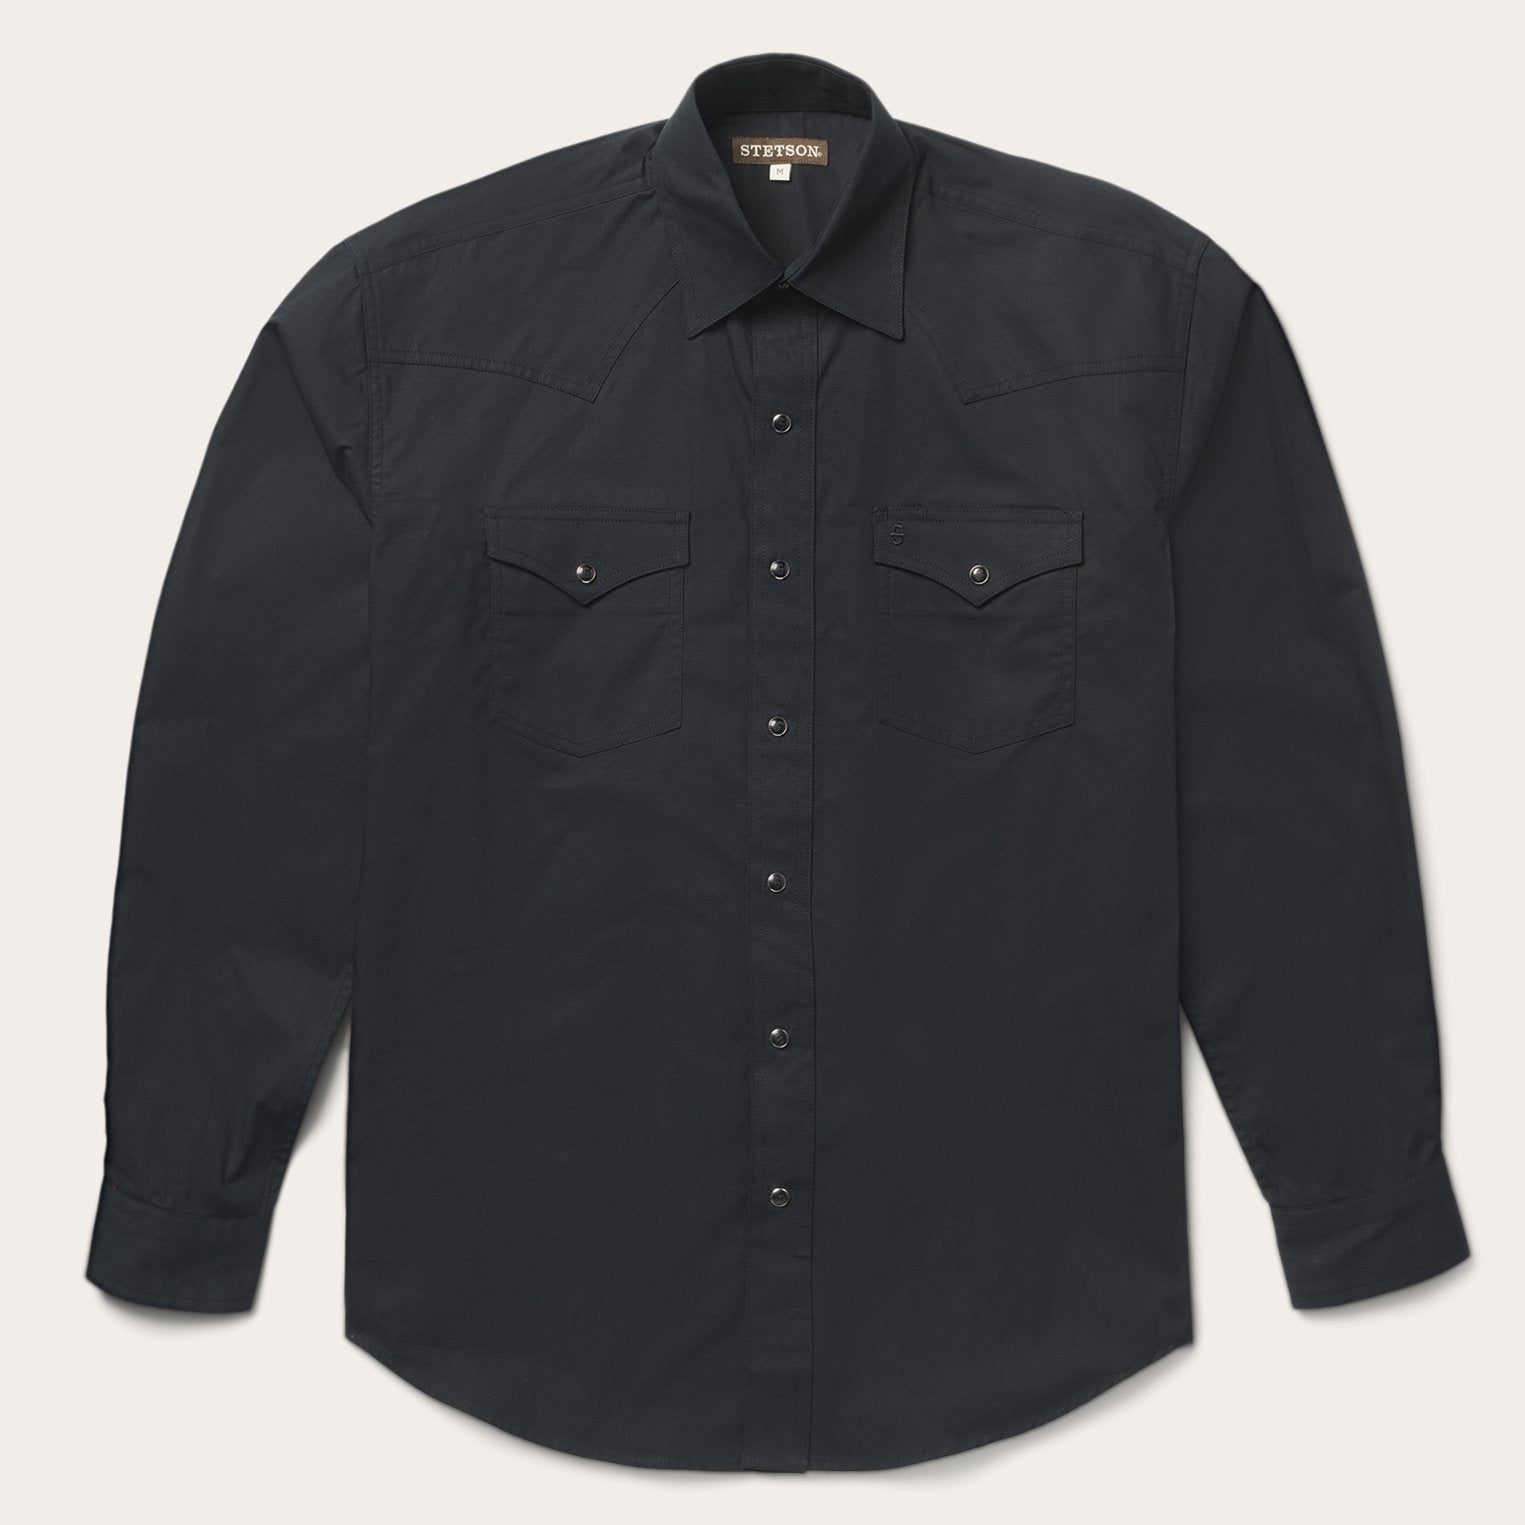 Stetson Western Shirt Men L/S Solid Snap 11-001-0465-1022 Bl Black